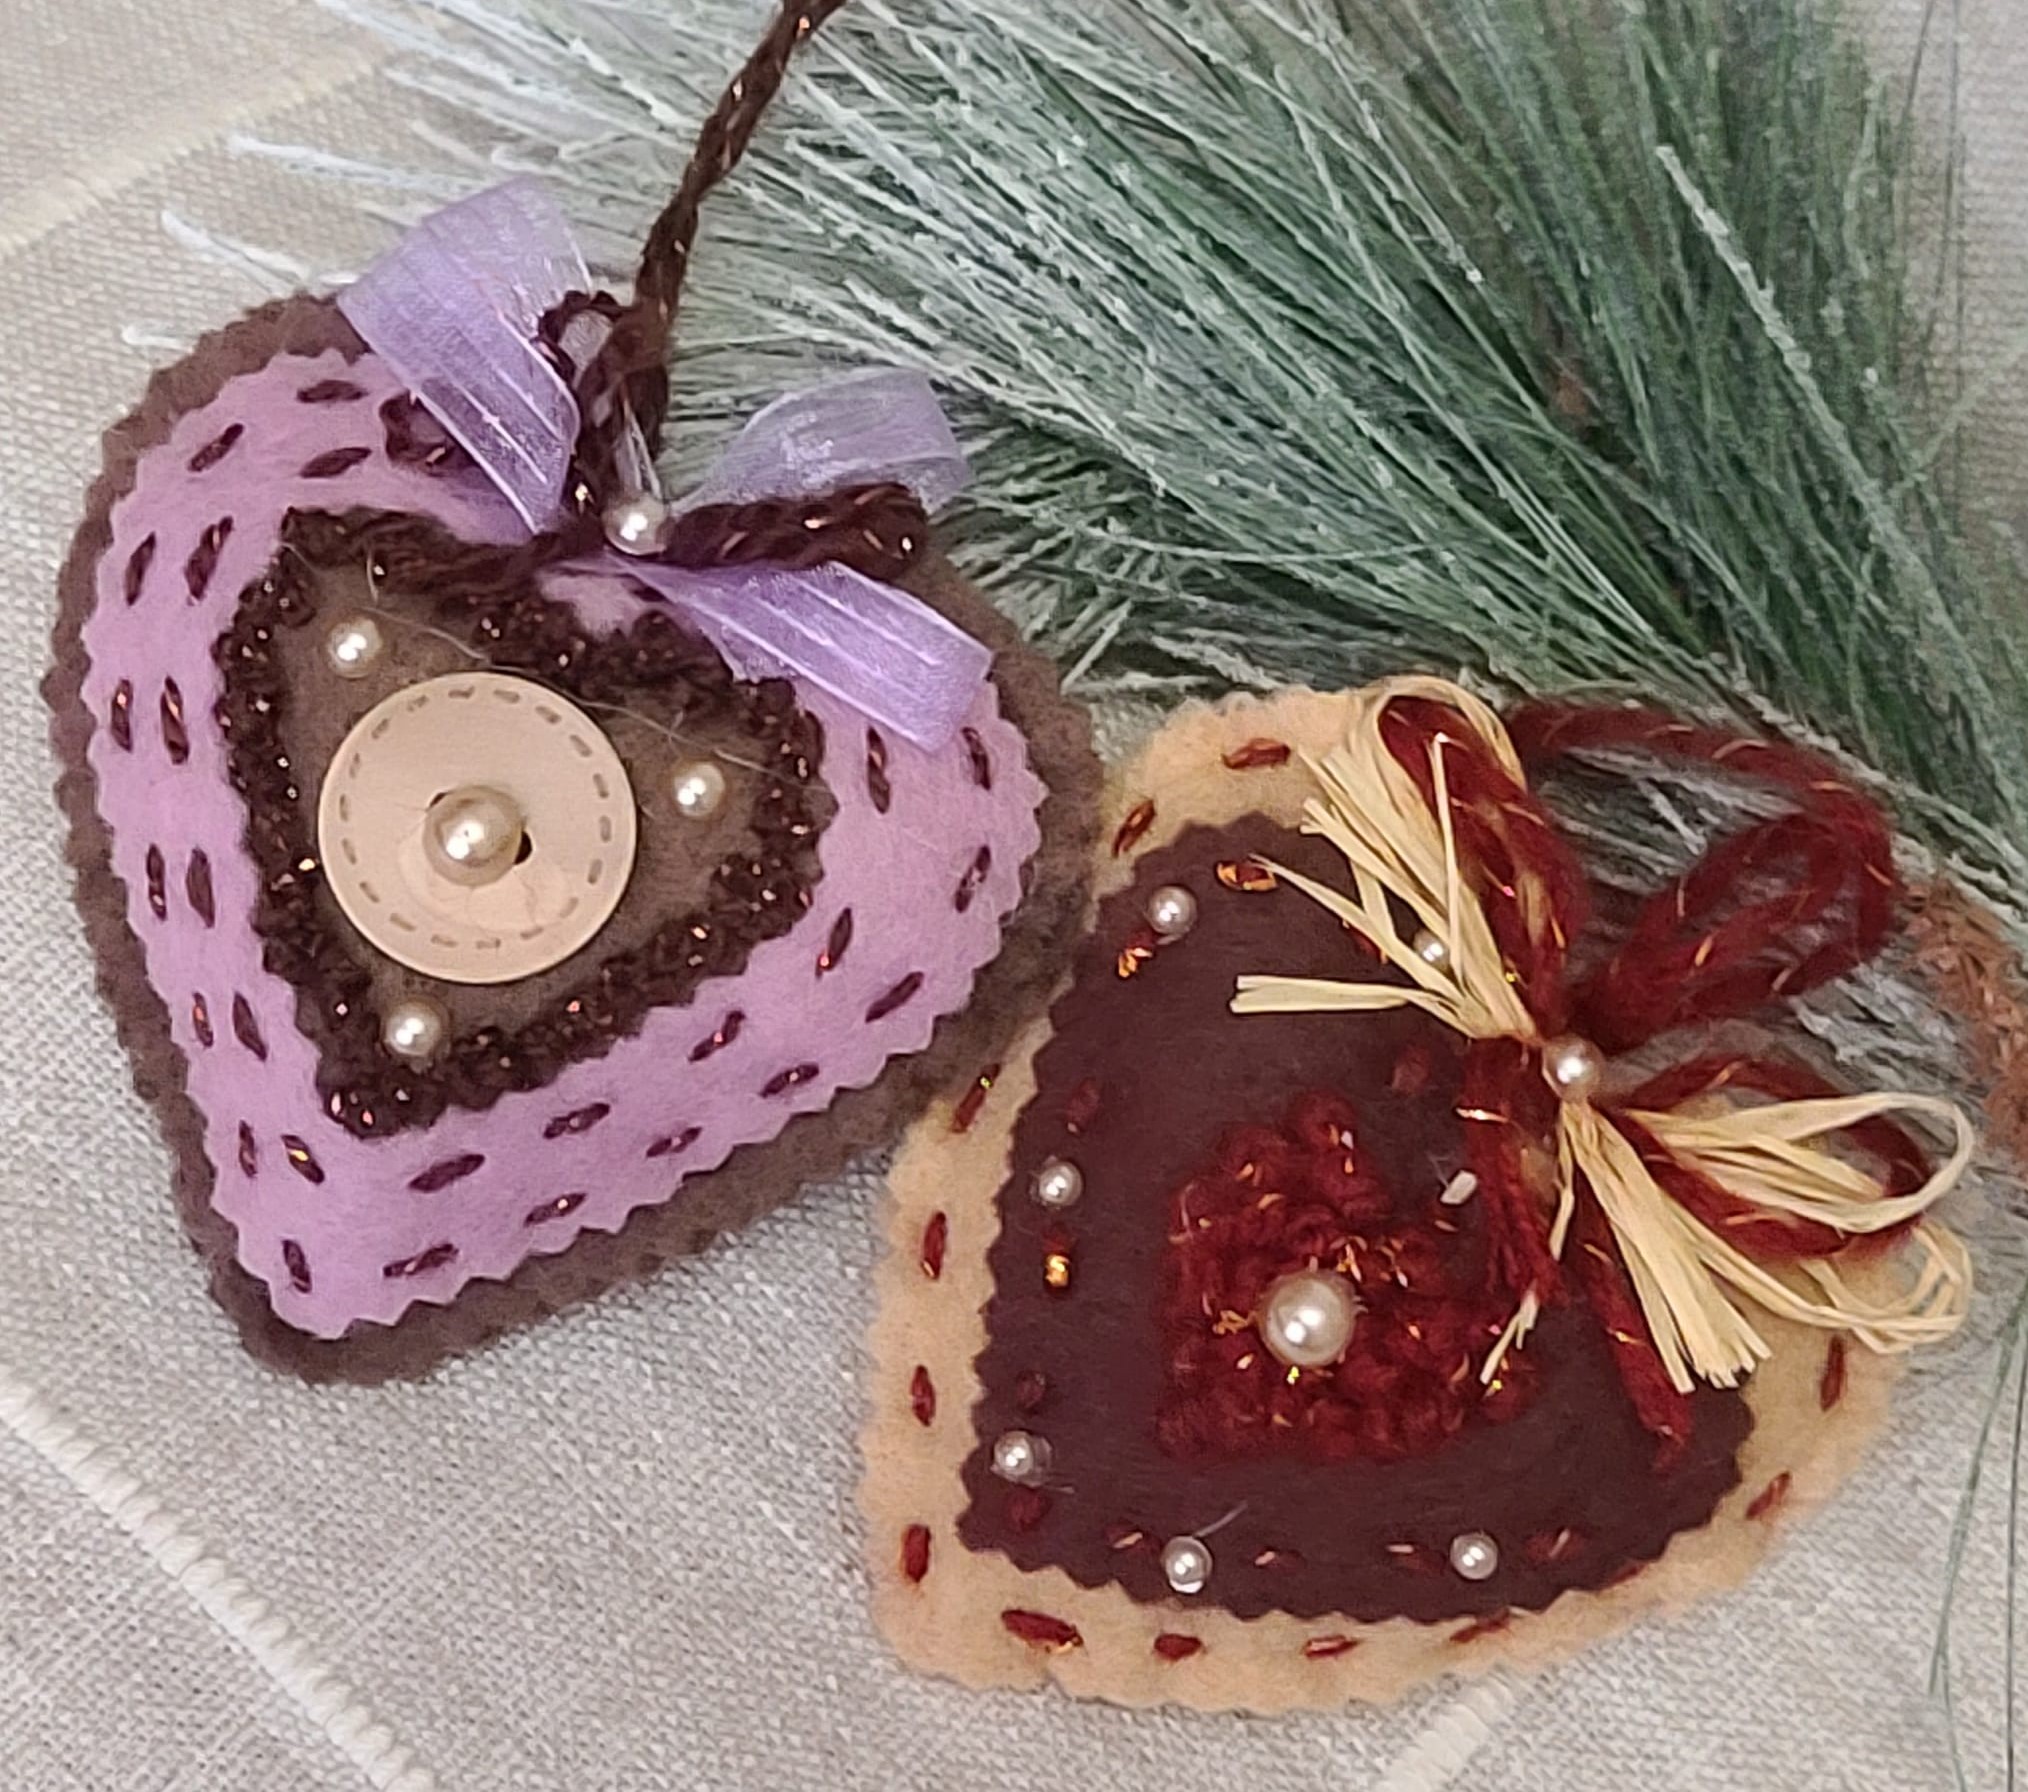 Handmade Felt Cookie Dough and Chocolate Heart Ornament Set of 2